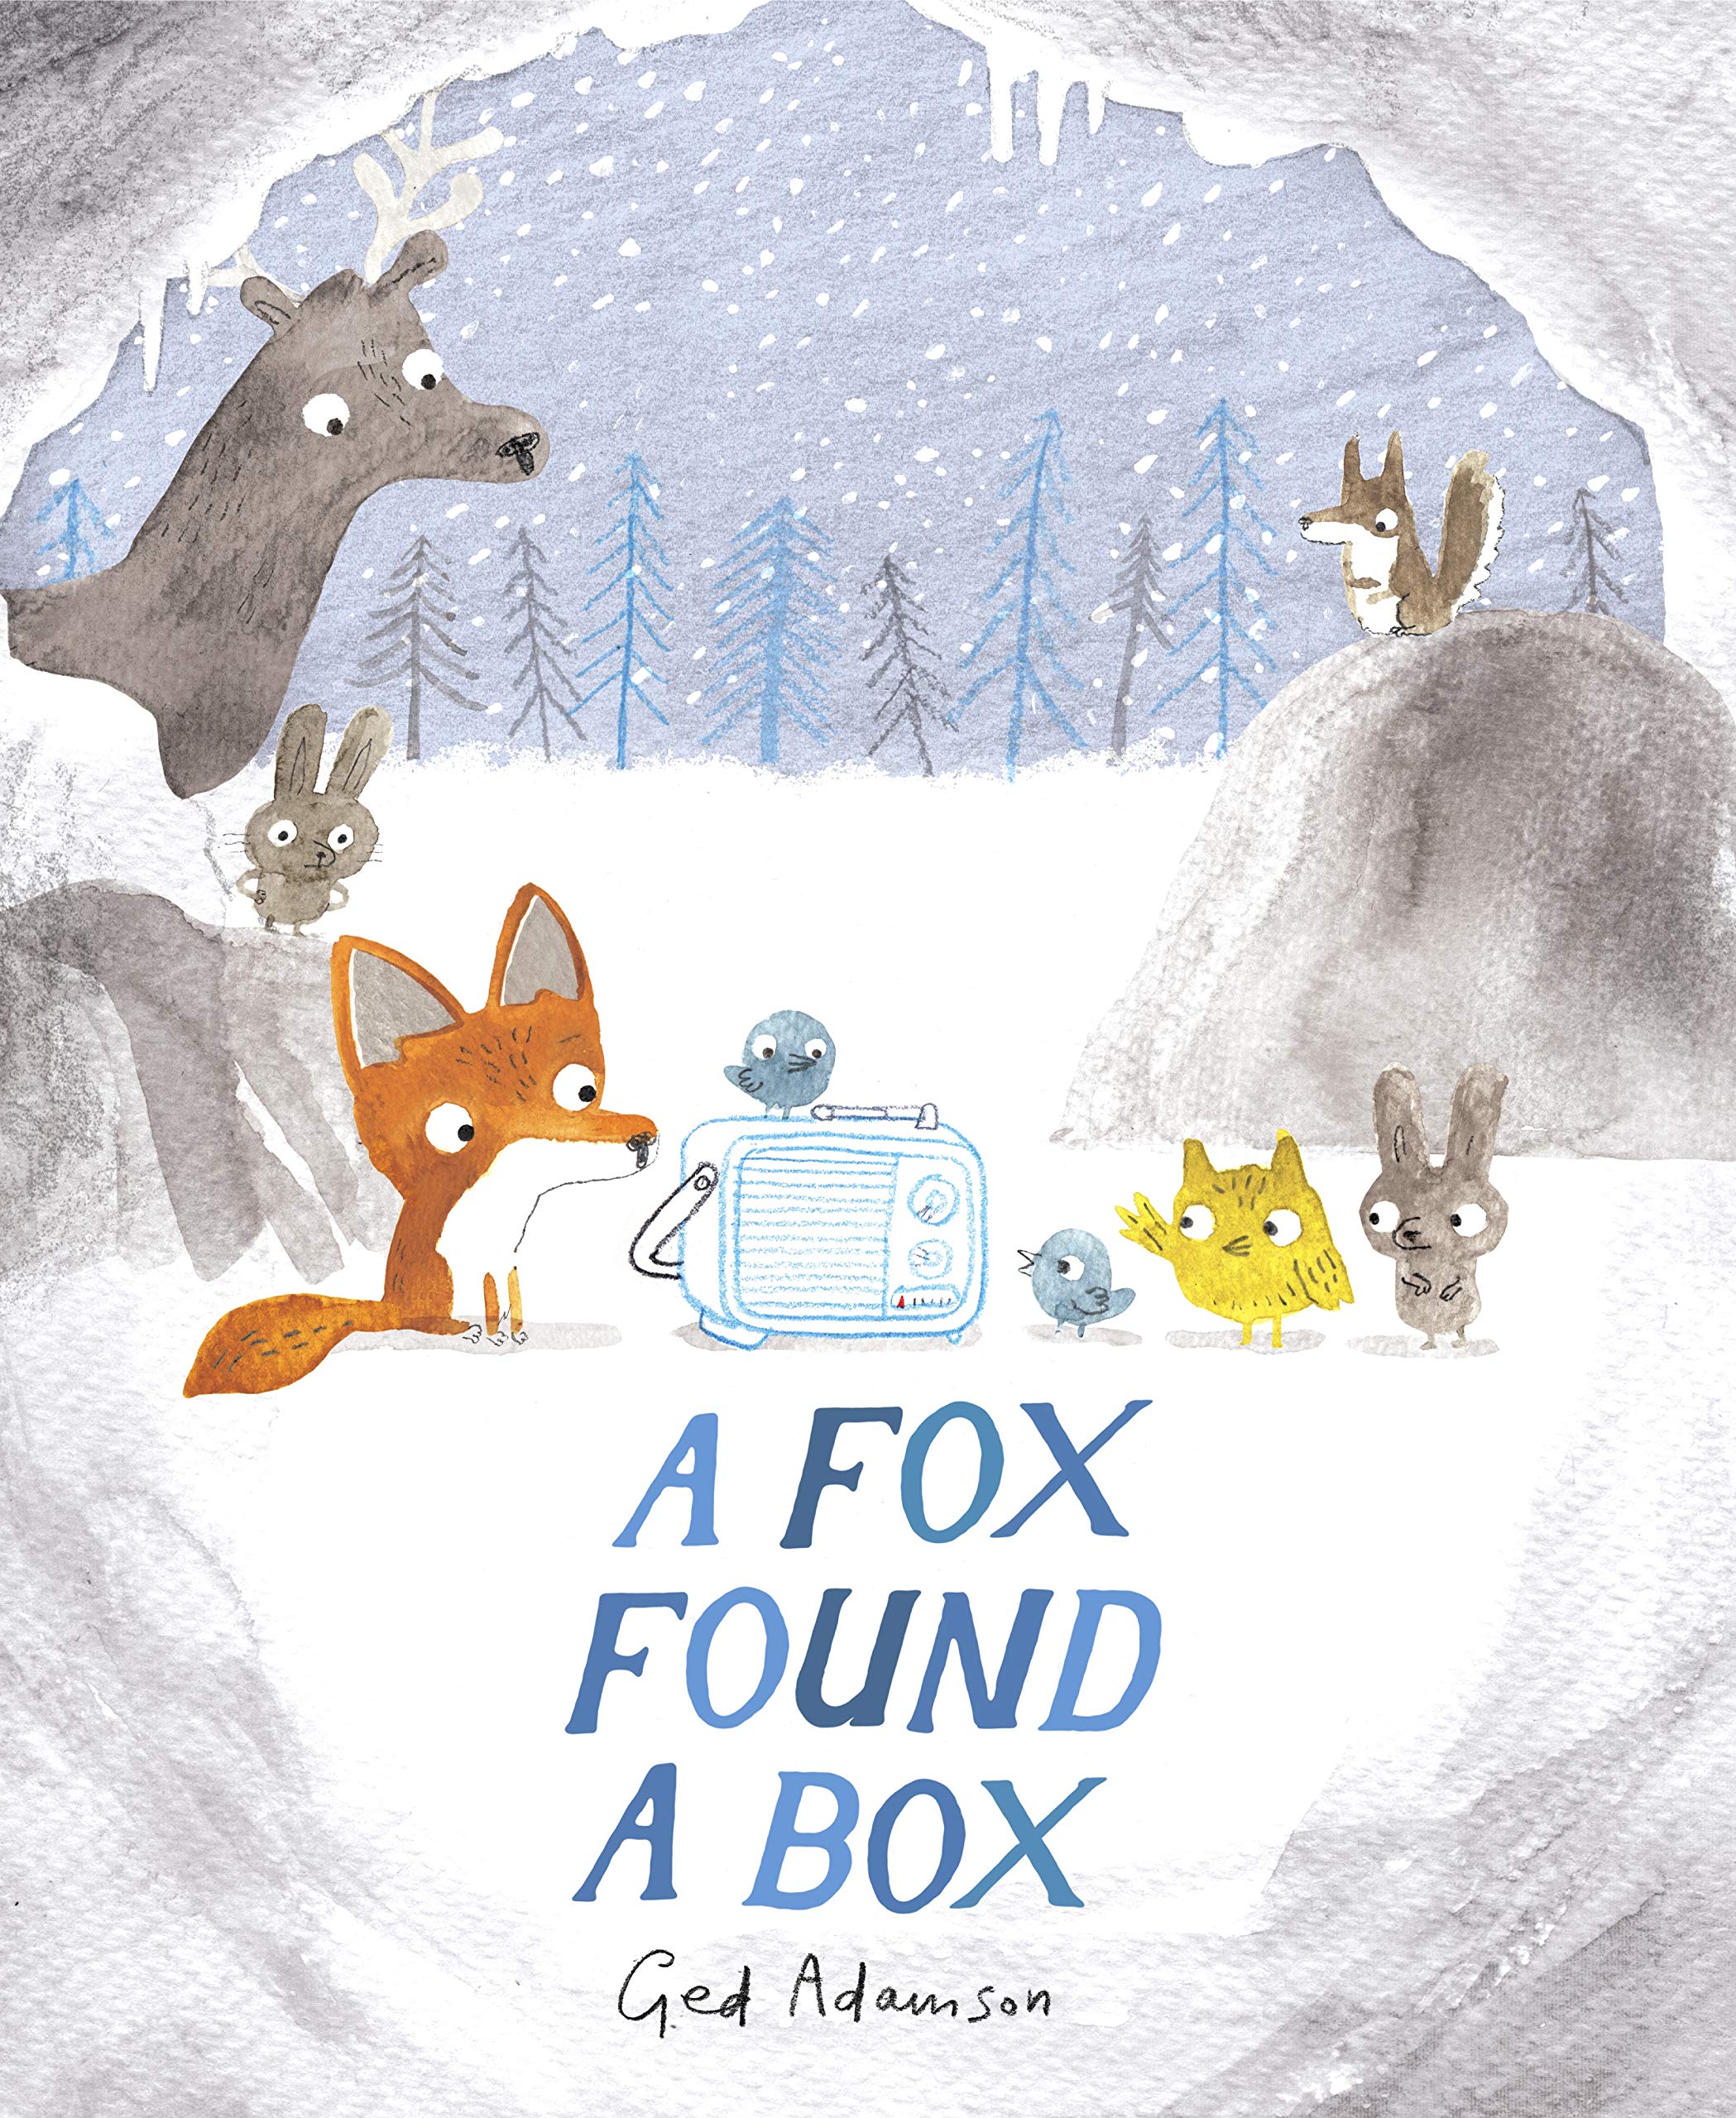 Image for "A Fox Found a Box"